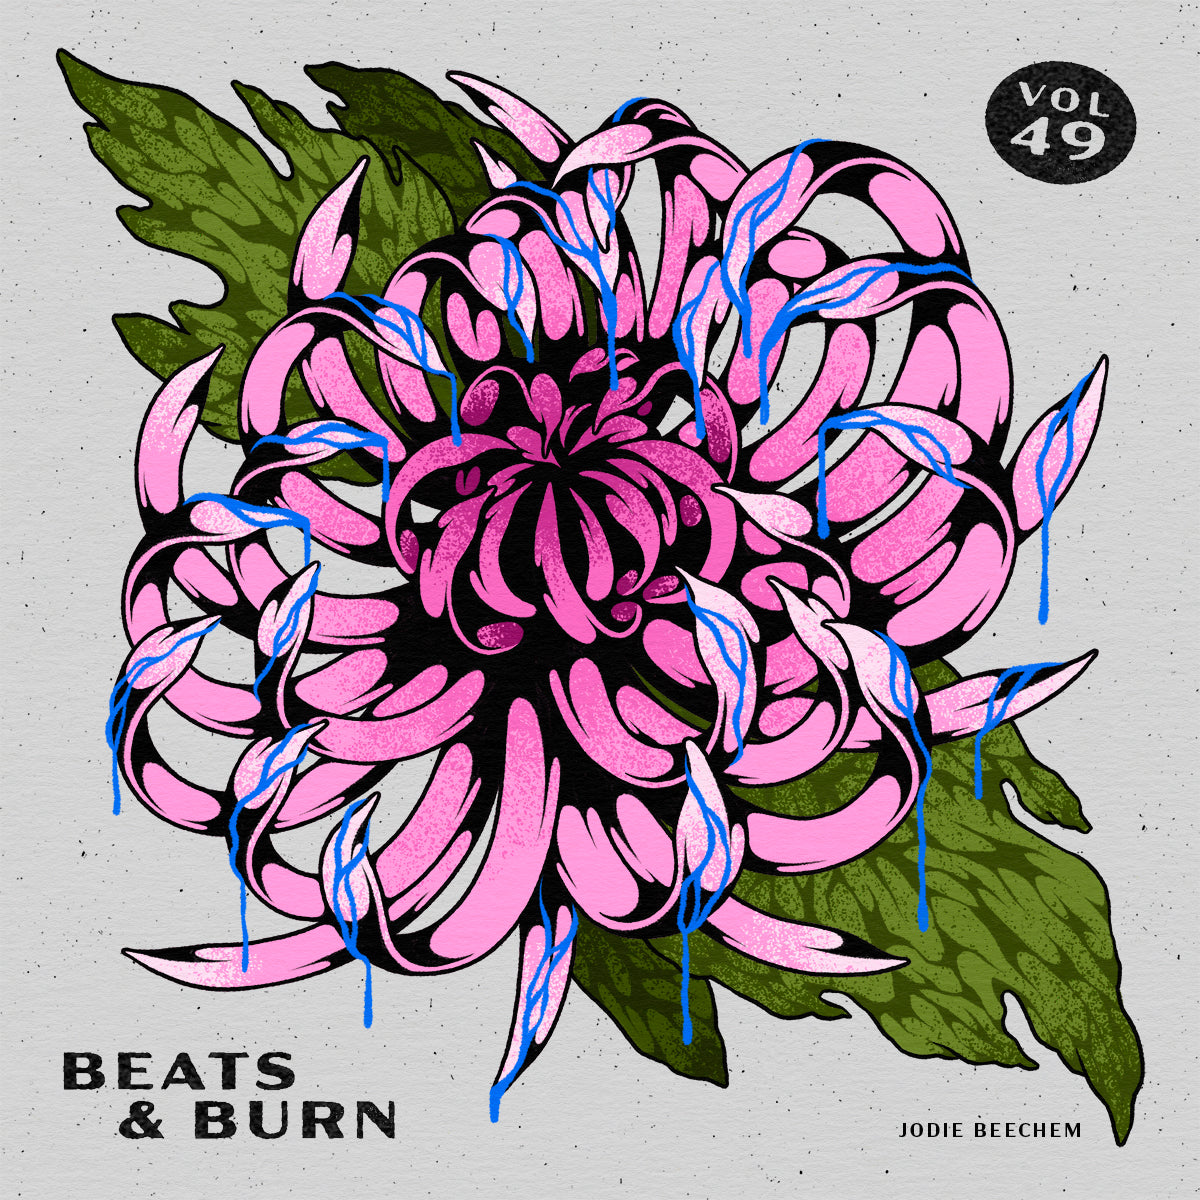 Beats & Burn: Volume 49 by artist Jodie Beechem